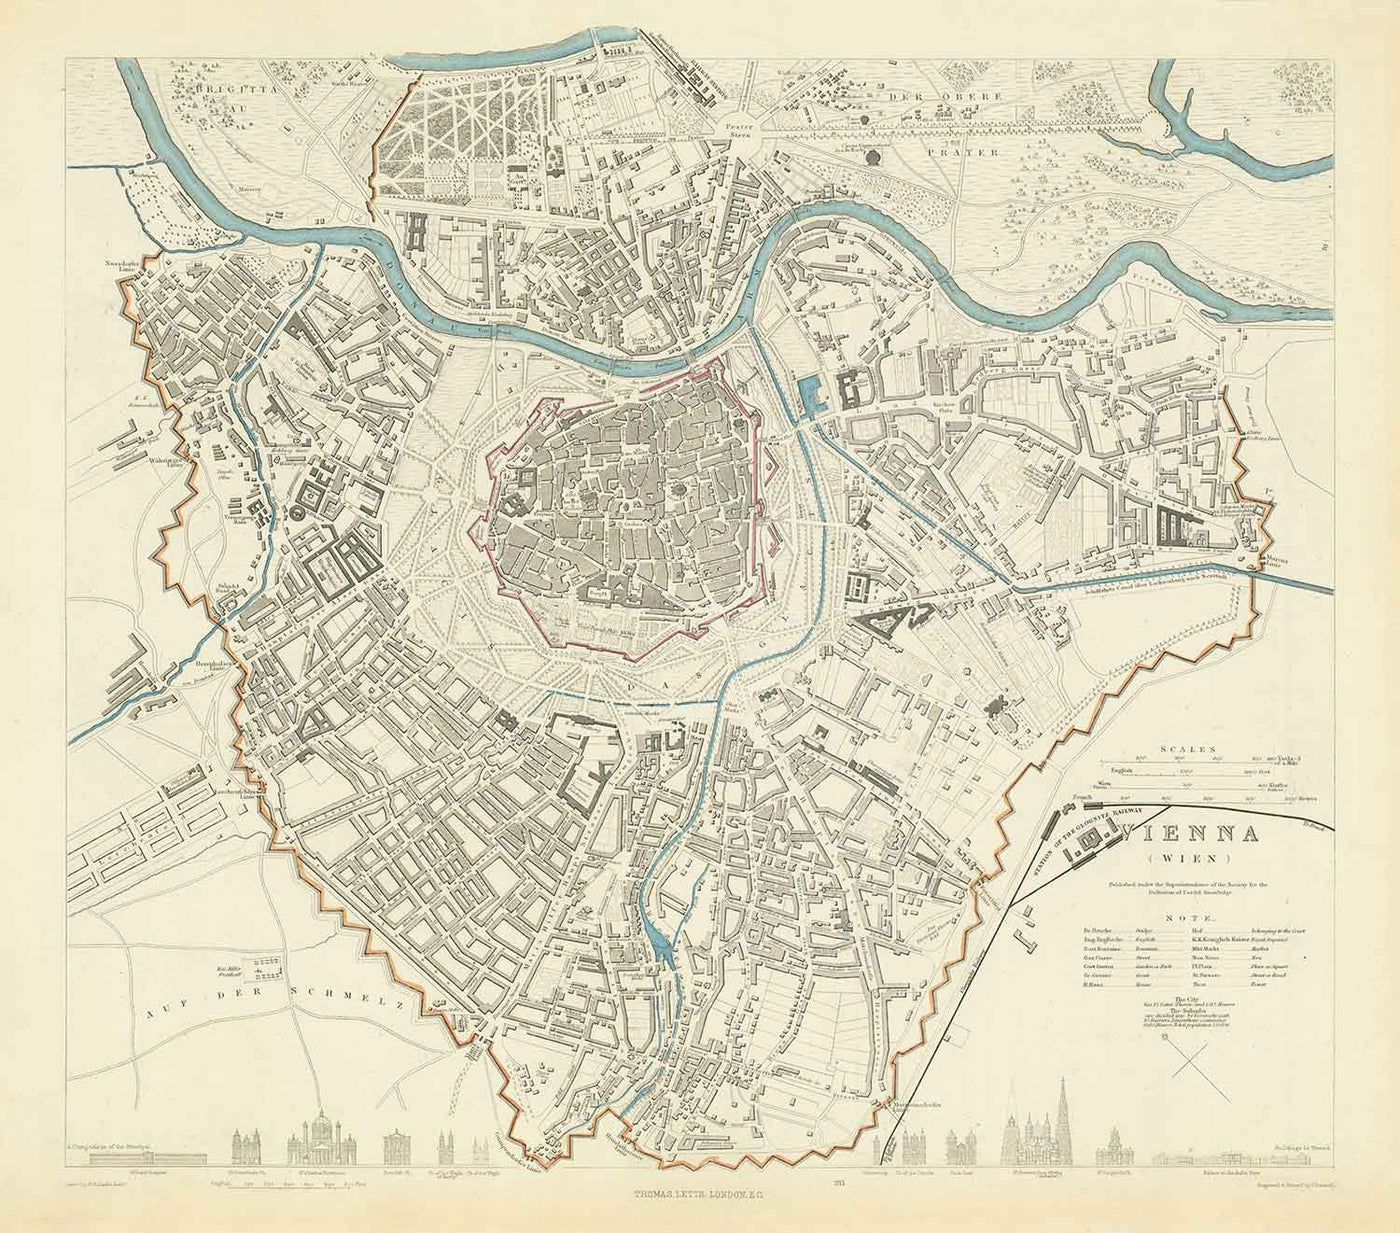 Ancienne carte de Vienne par SDUK en 1887 - Danube, Alte Donau, Graben, Rennweg, église Saint-Charles